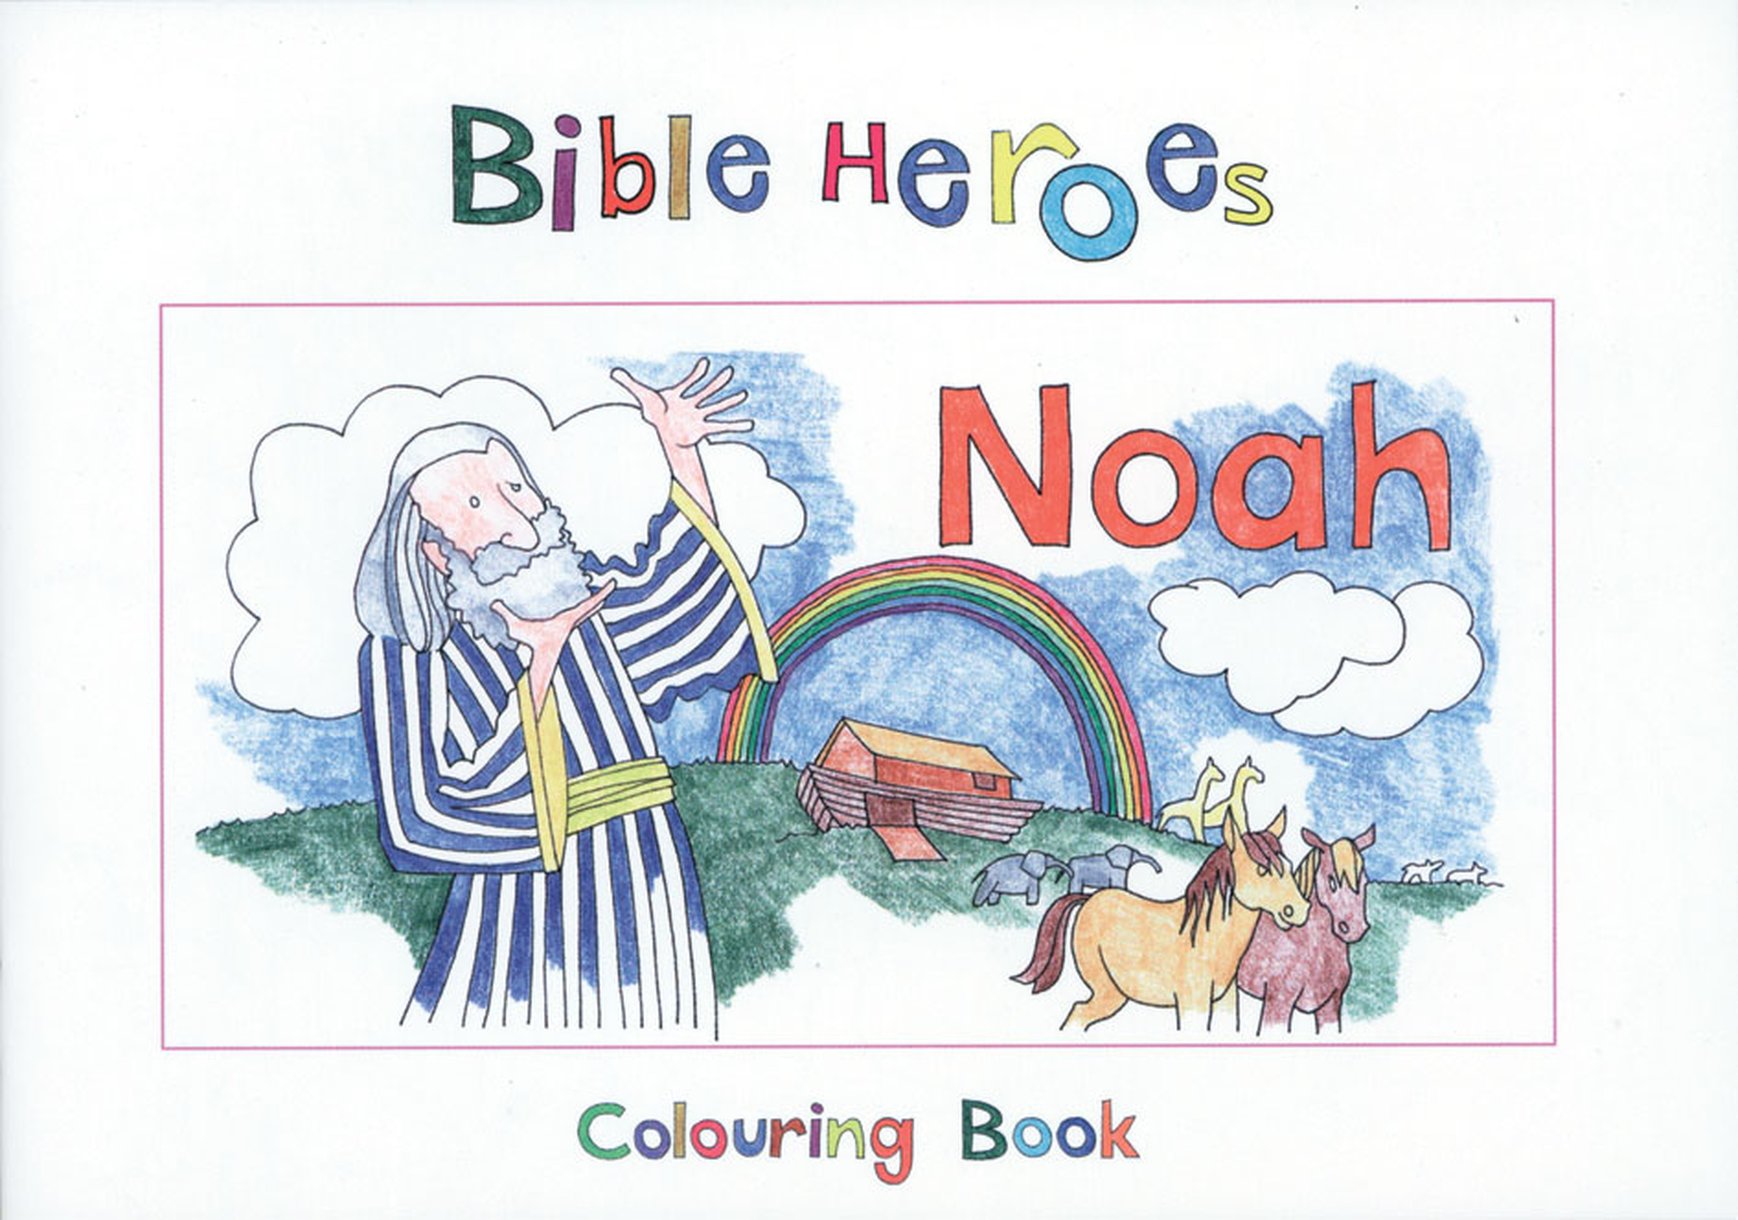 Bible Heroes Noah by Carine MacKenzie - Christian Focus ...